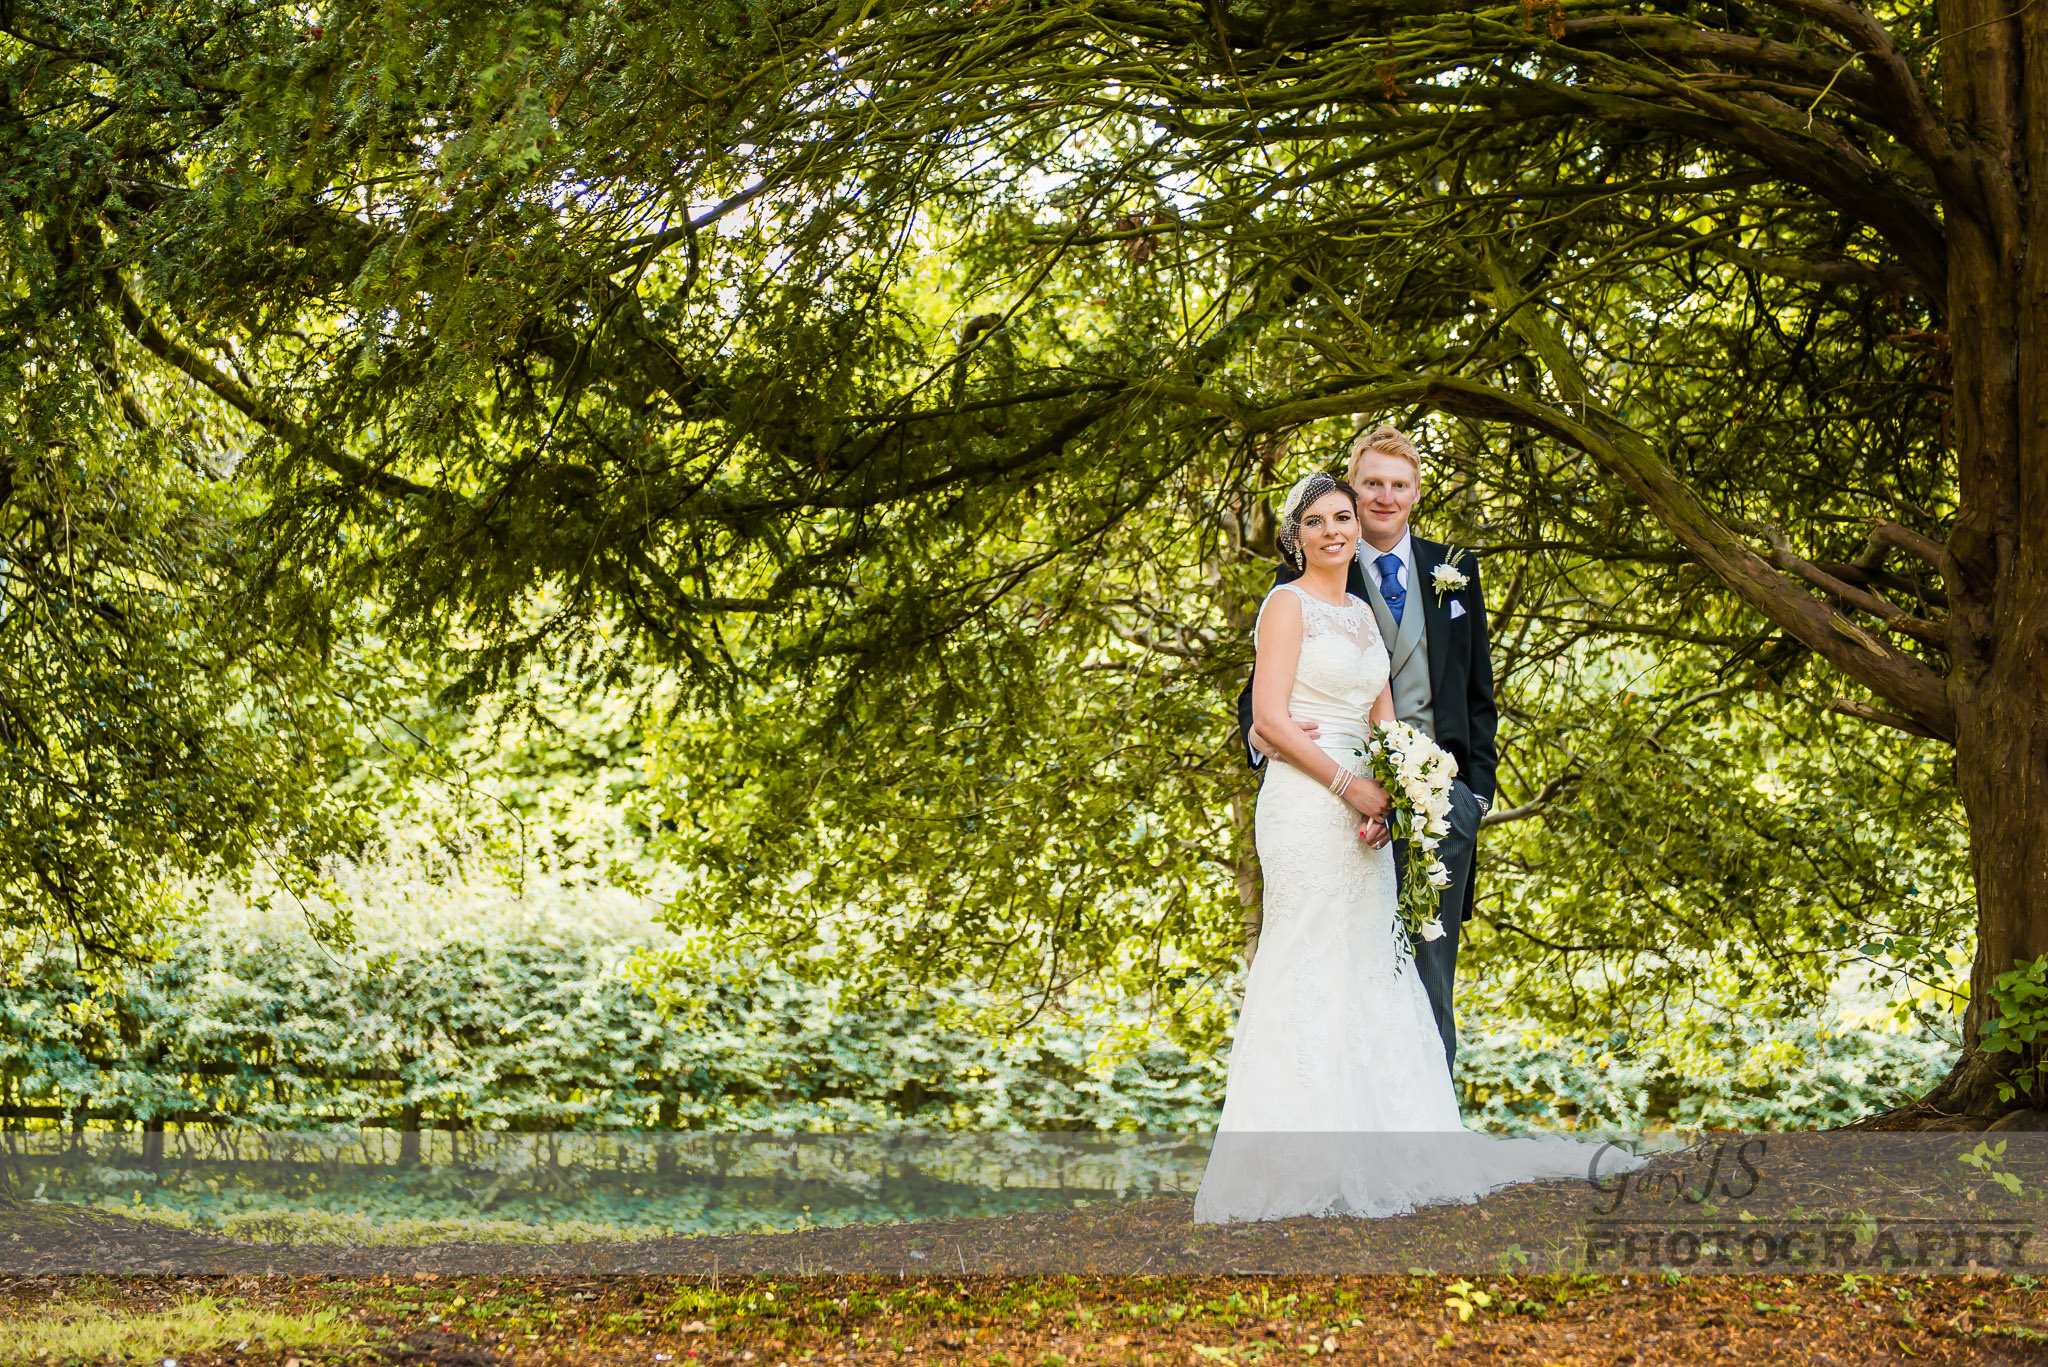 Rachel & Chris | Crowton | Wedding Photography